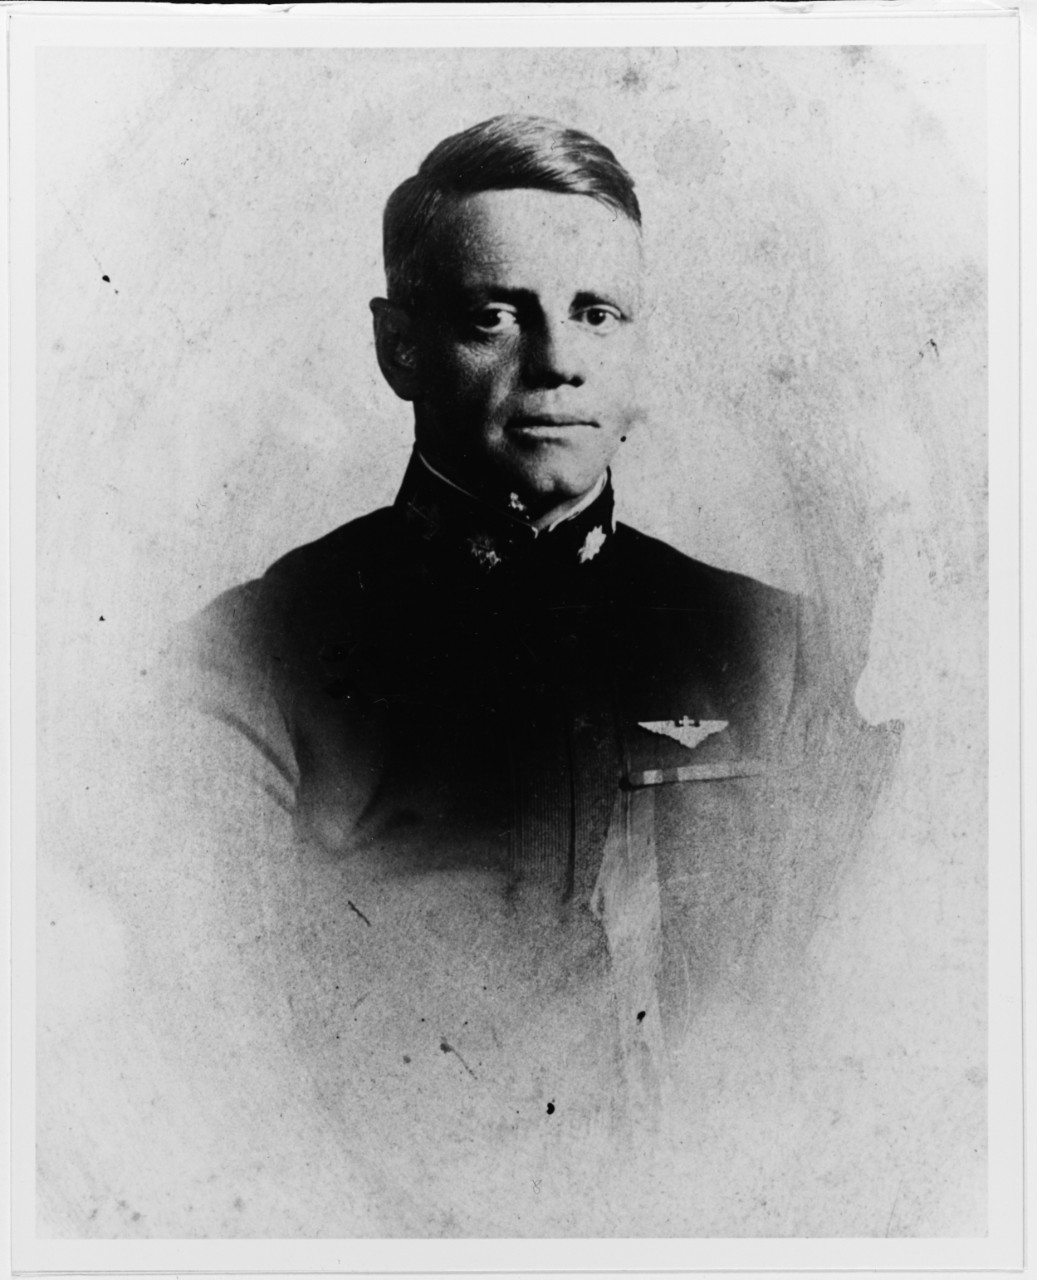 Commander Henry C. Mustin, USN